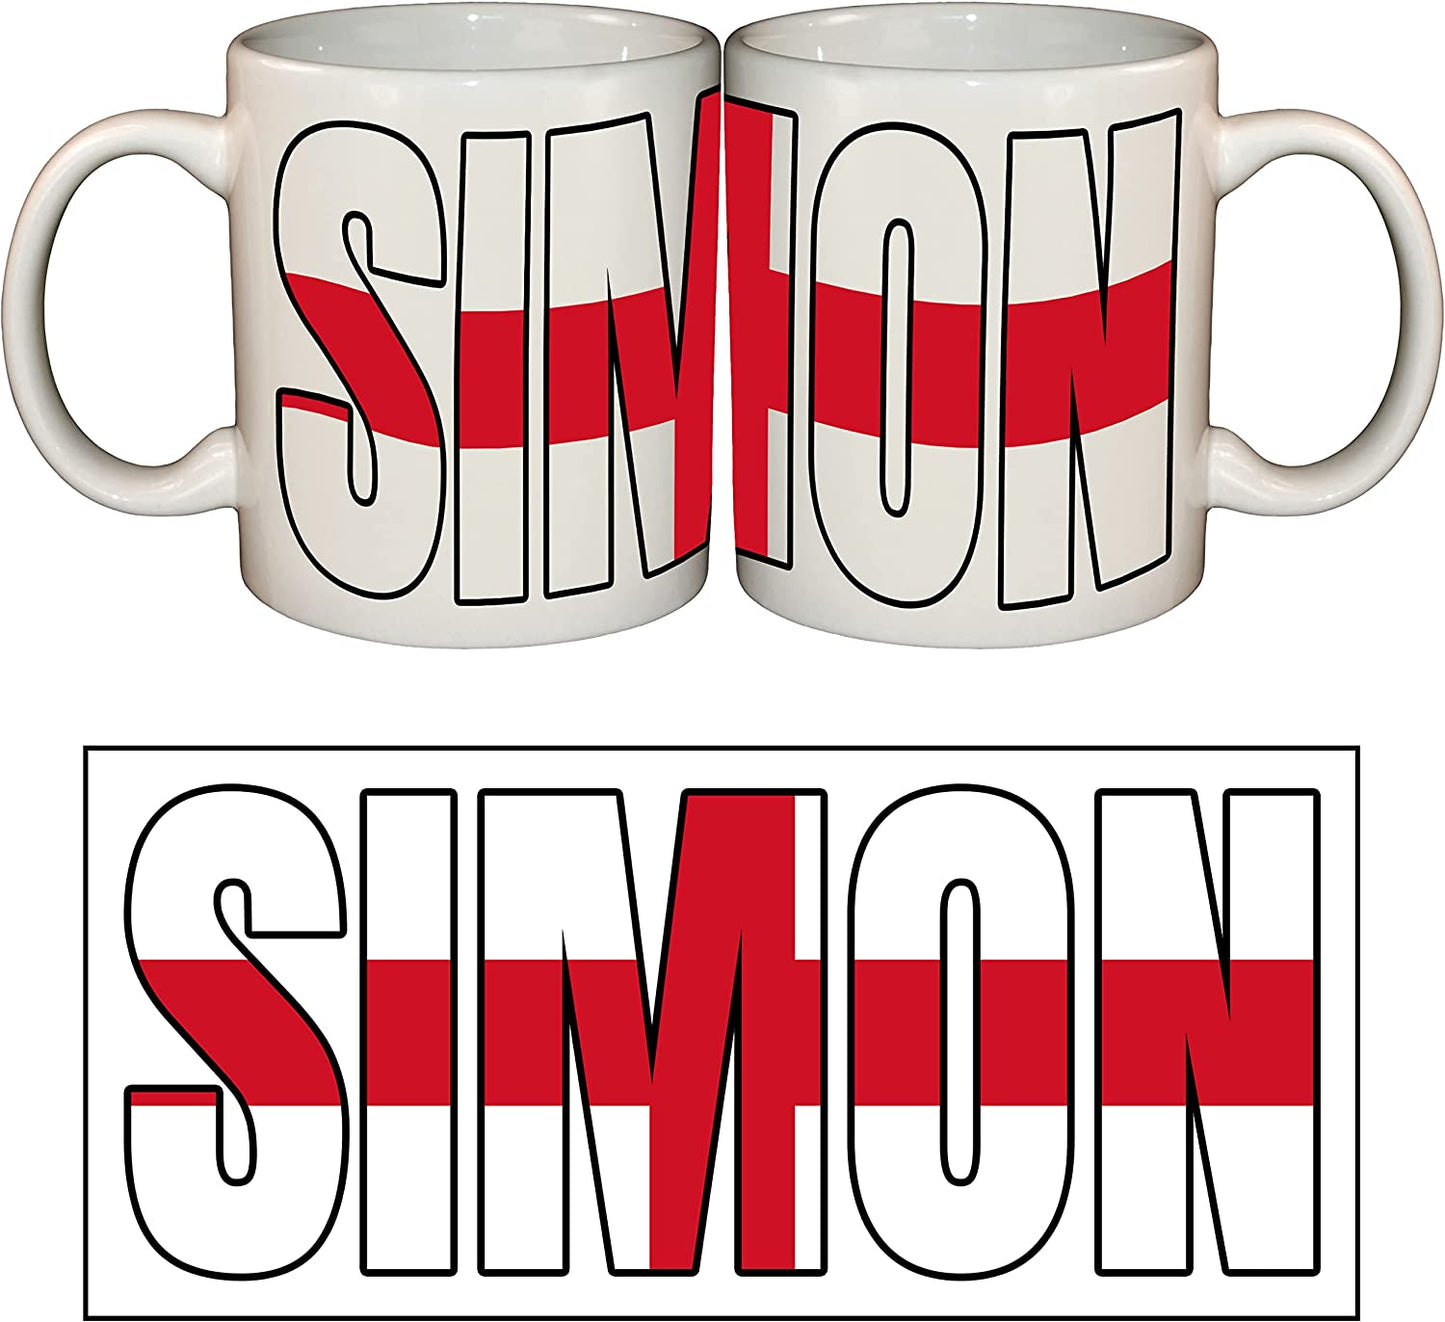 MB Prints England Flag Name Mug - Add Any Name - 320ml Ceramic Coffee Tea Cup